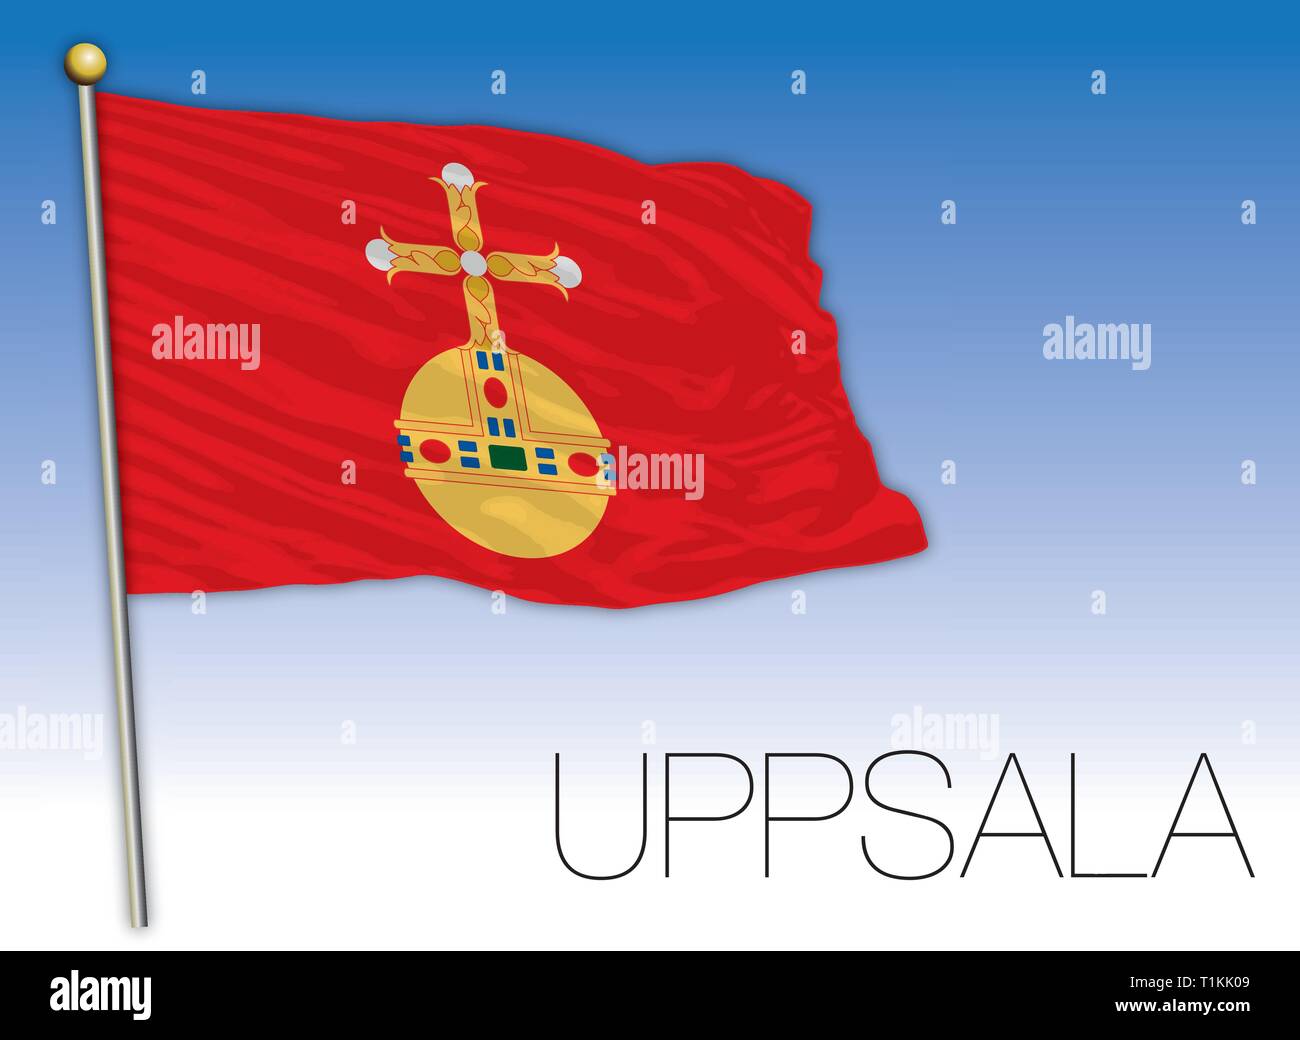 Uppsala bandiera regionale, Svezia, illustrazione vettoriale Illustrazione Vettoriale